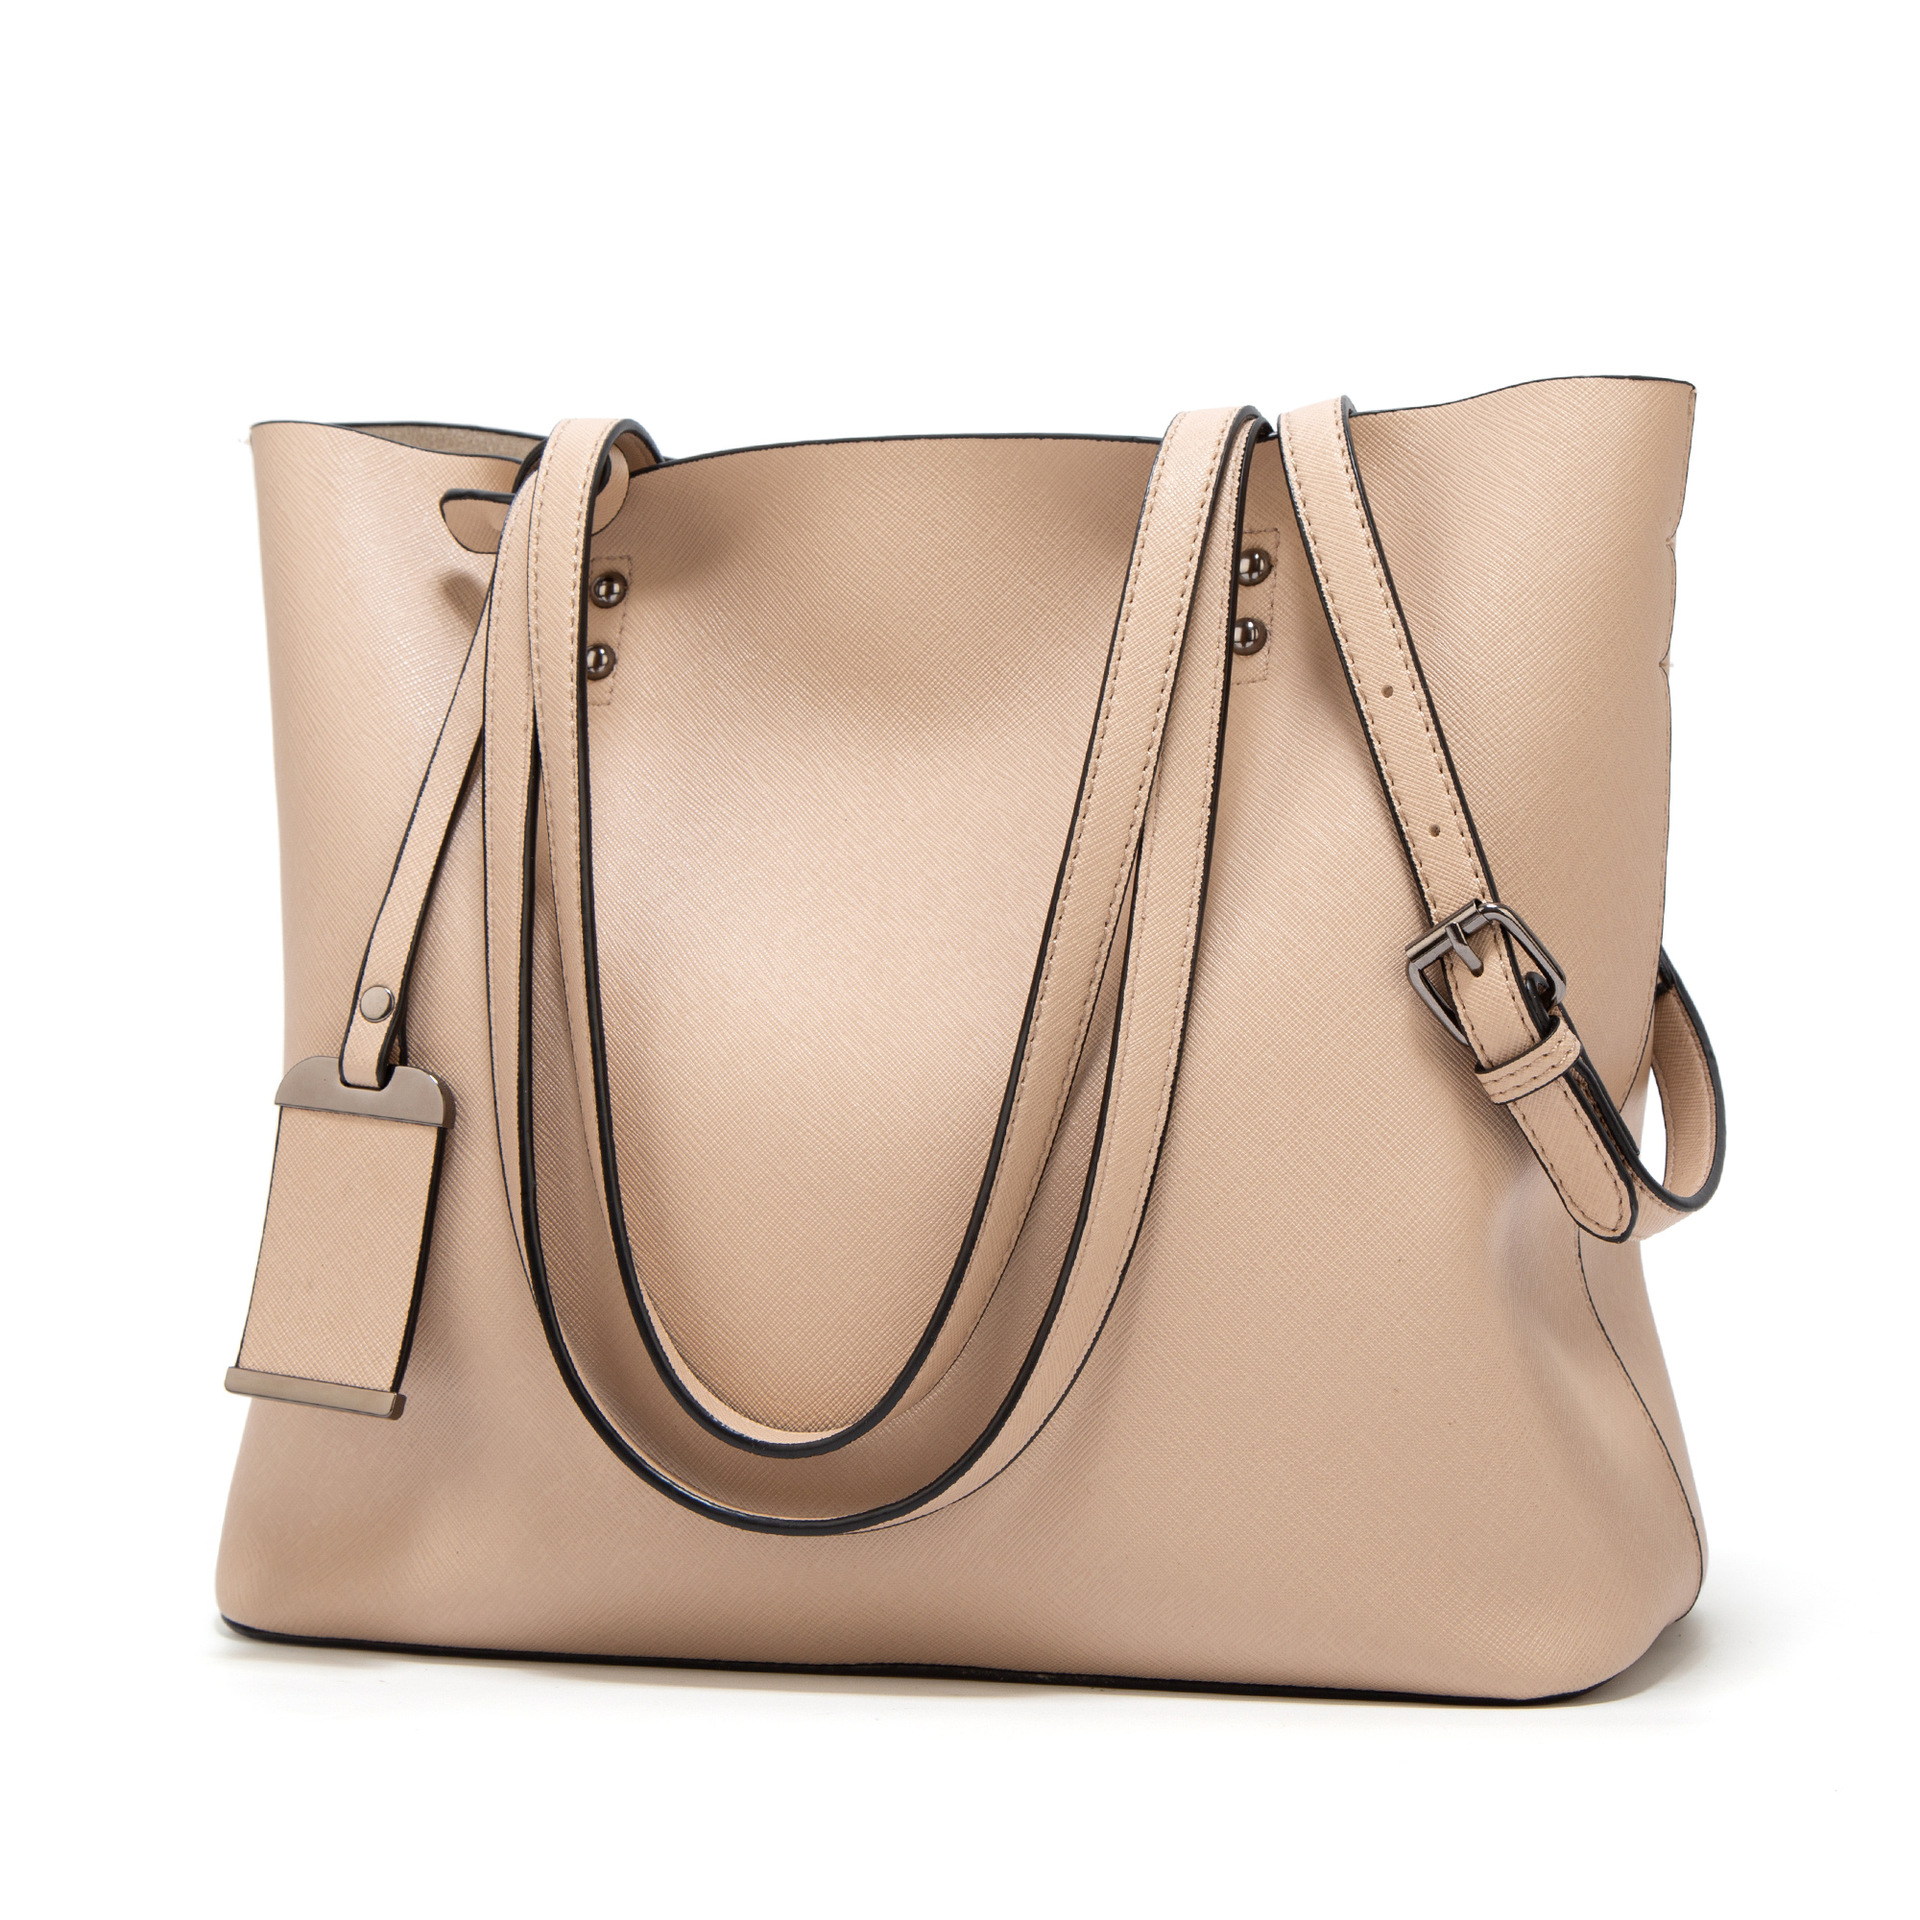 Synthetic leather shoulder bags Latest design women handbags K-0504